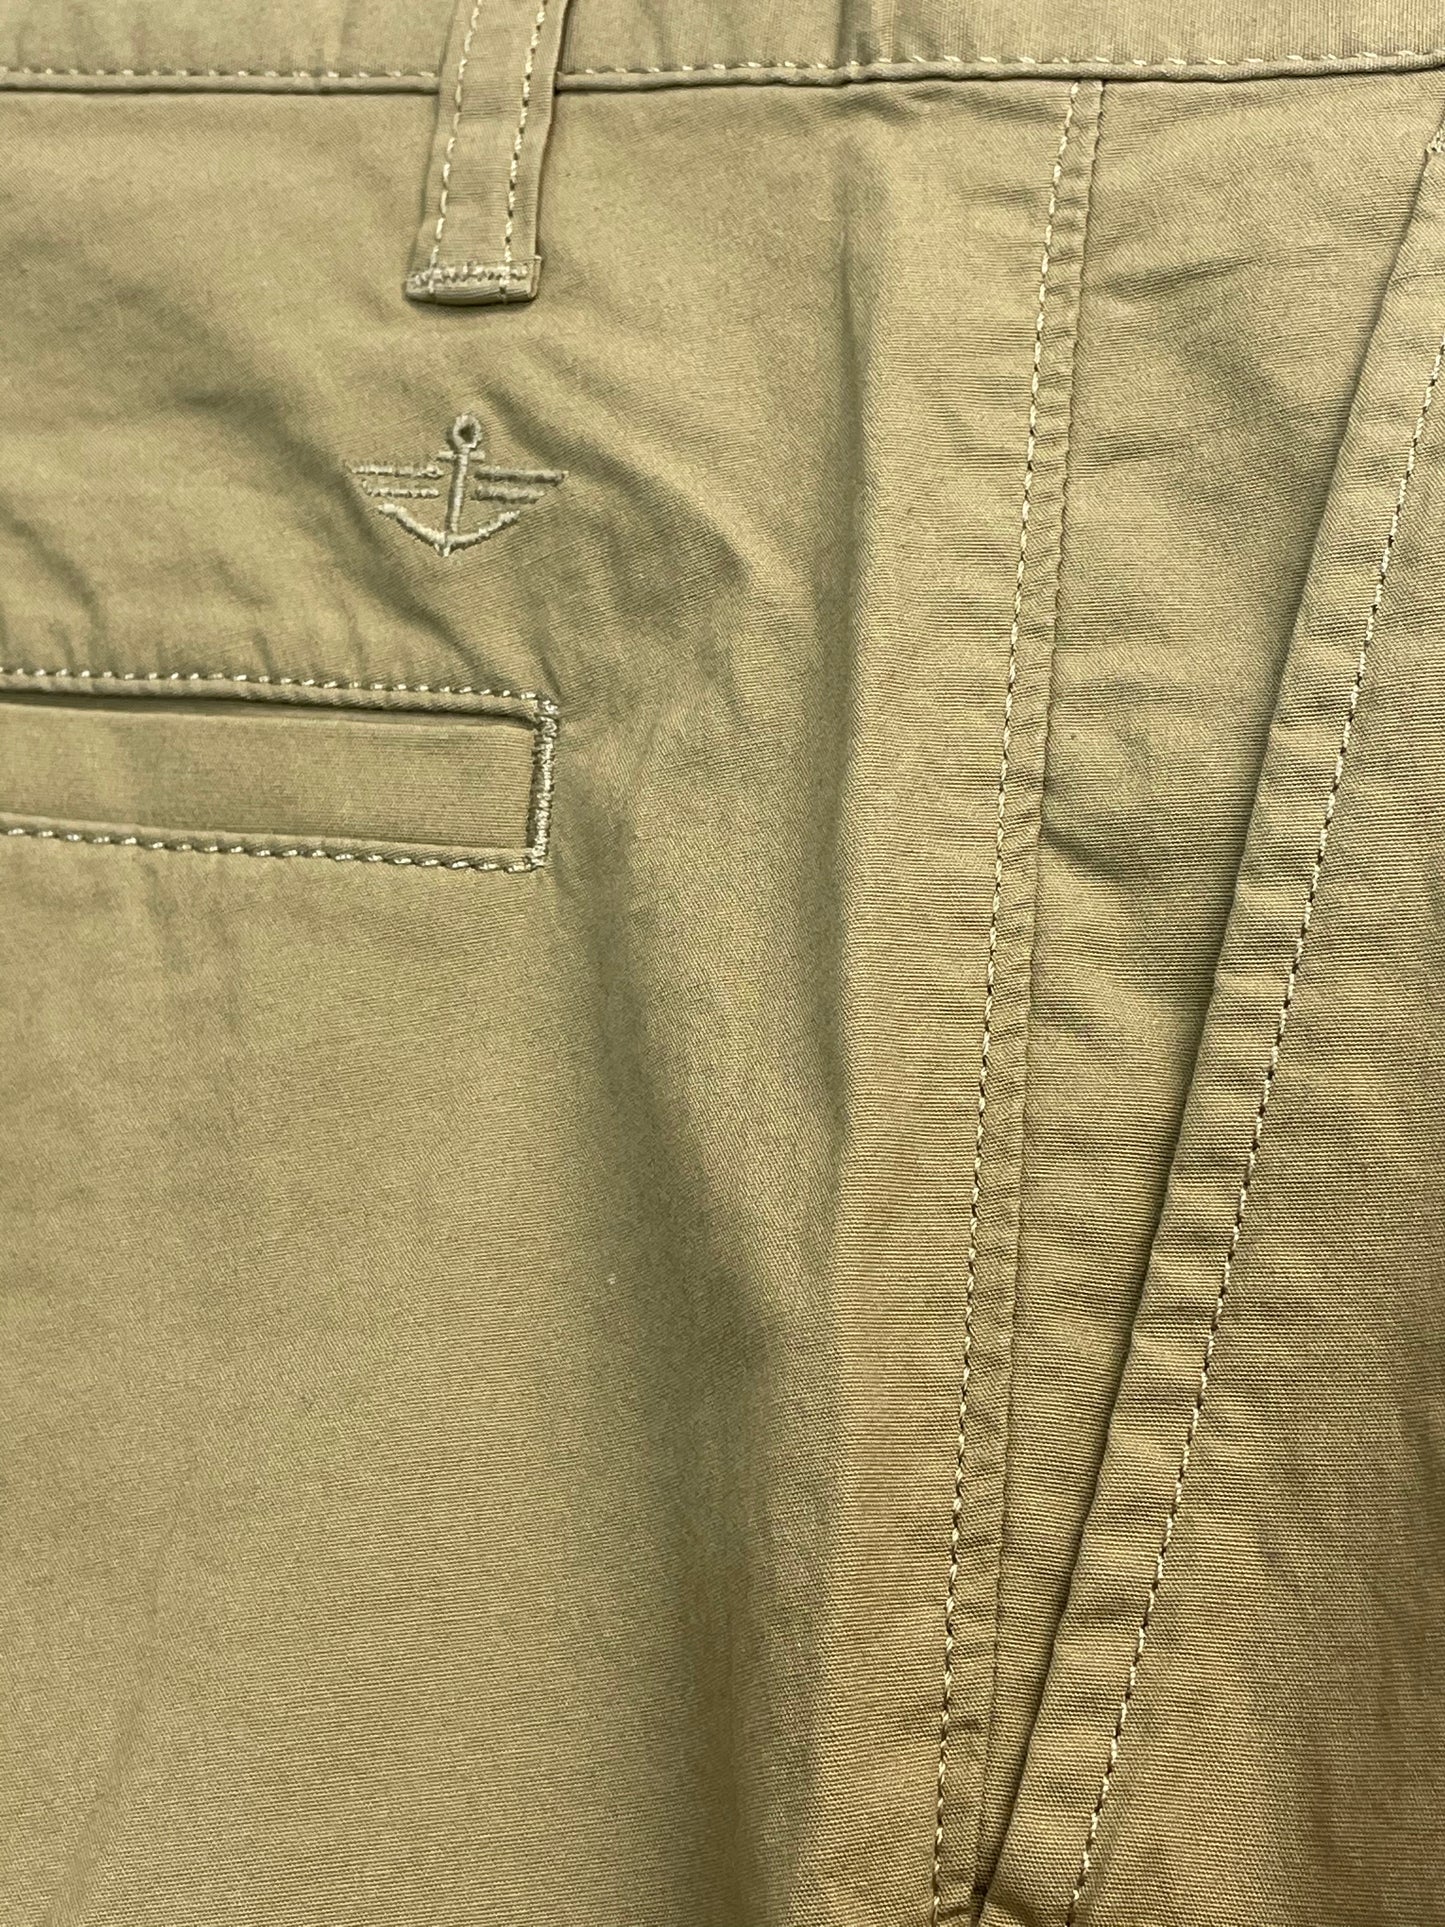 Cotton Blend Slim Fit Men's Chino Shorts in Khaki W38